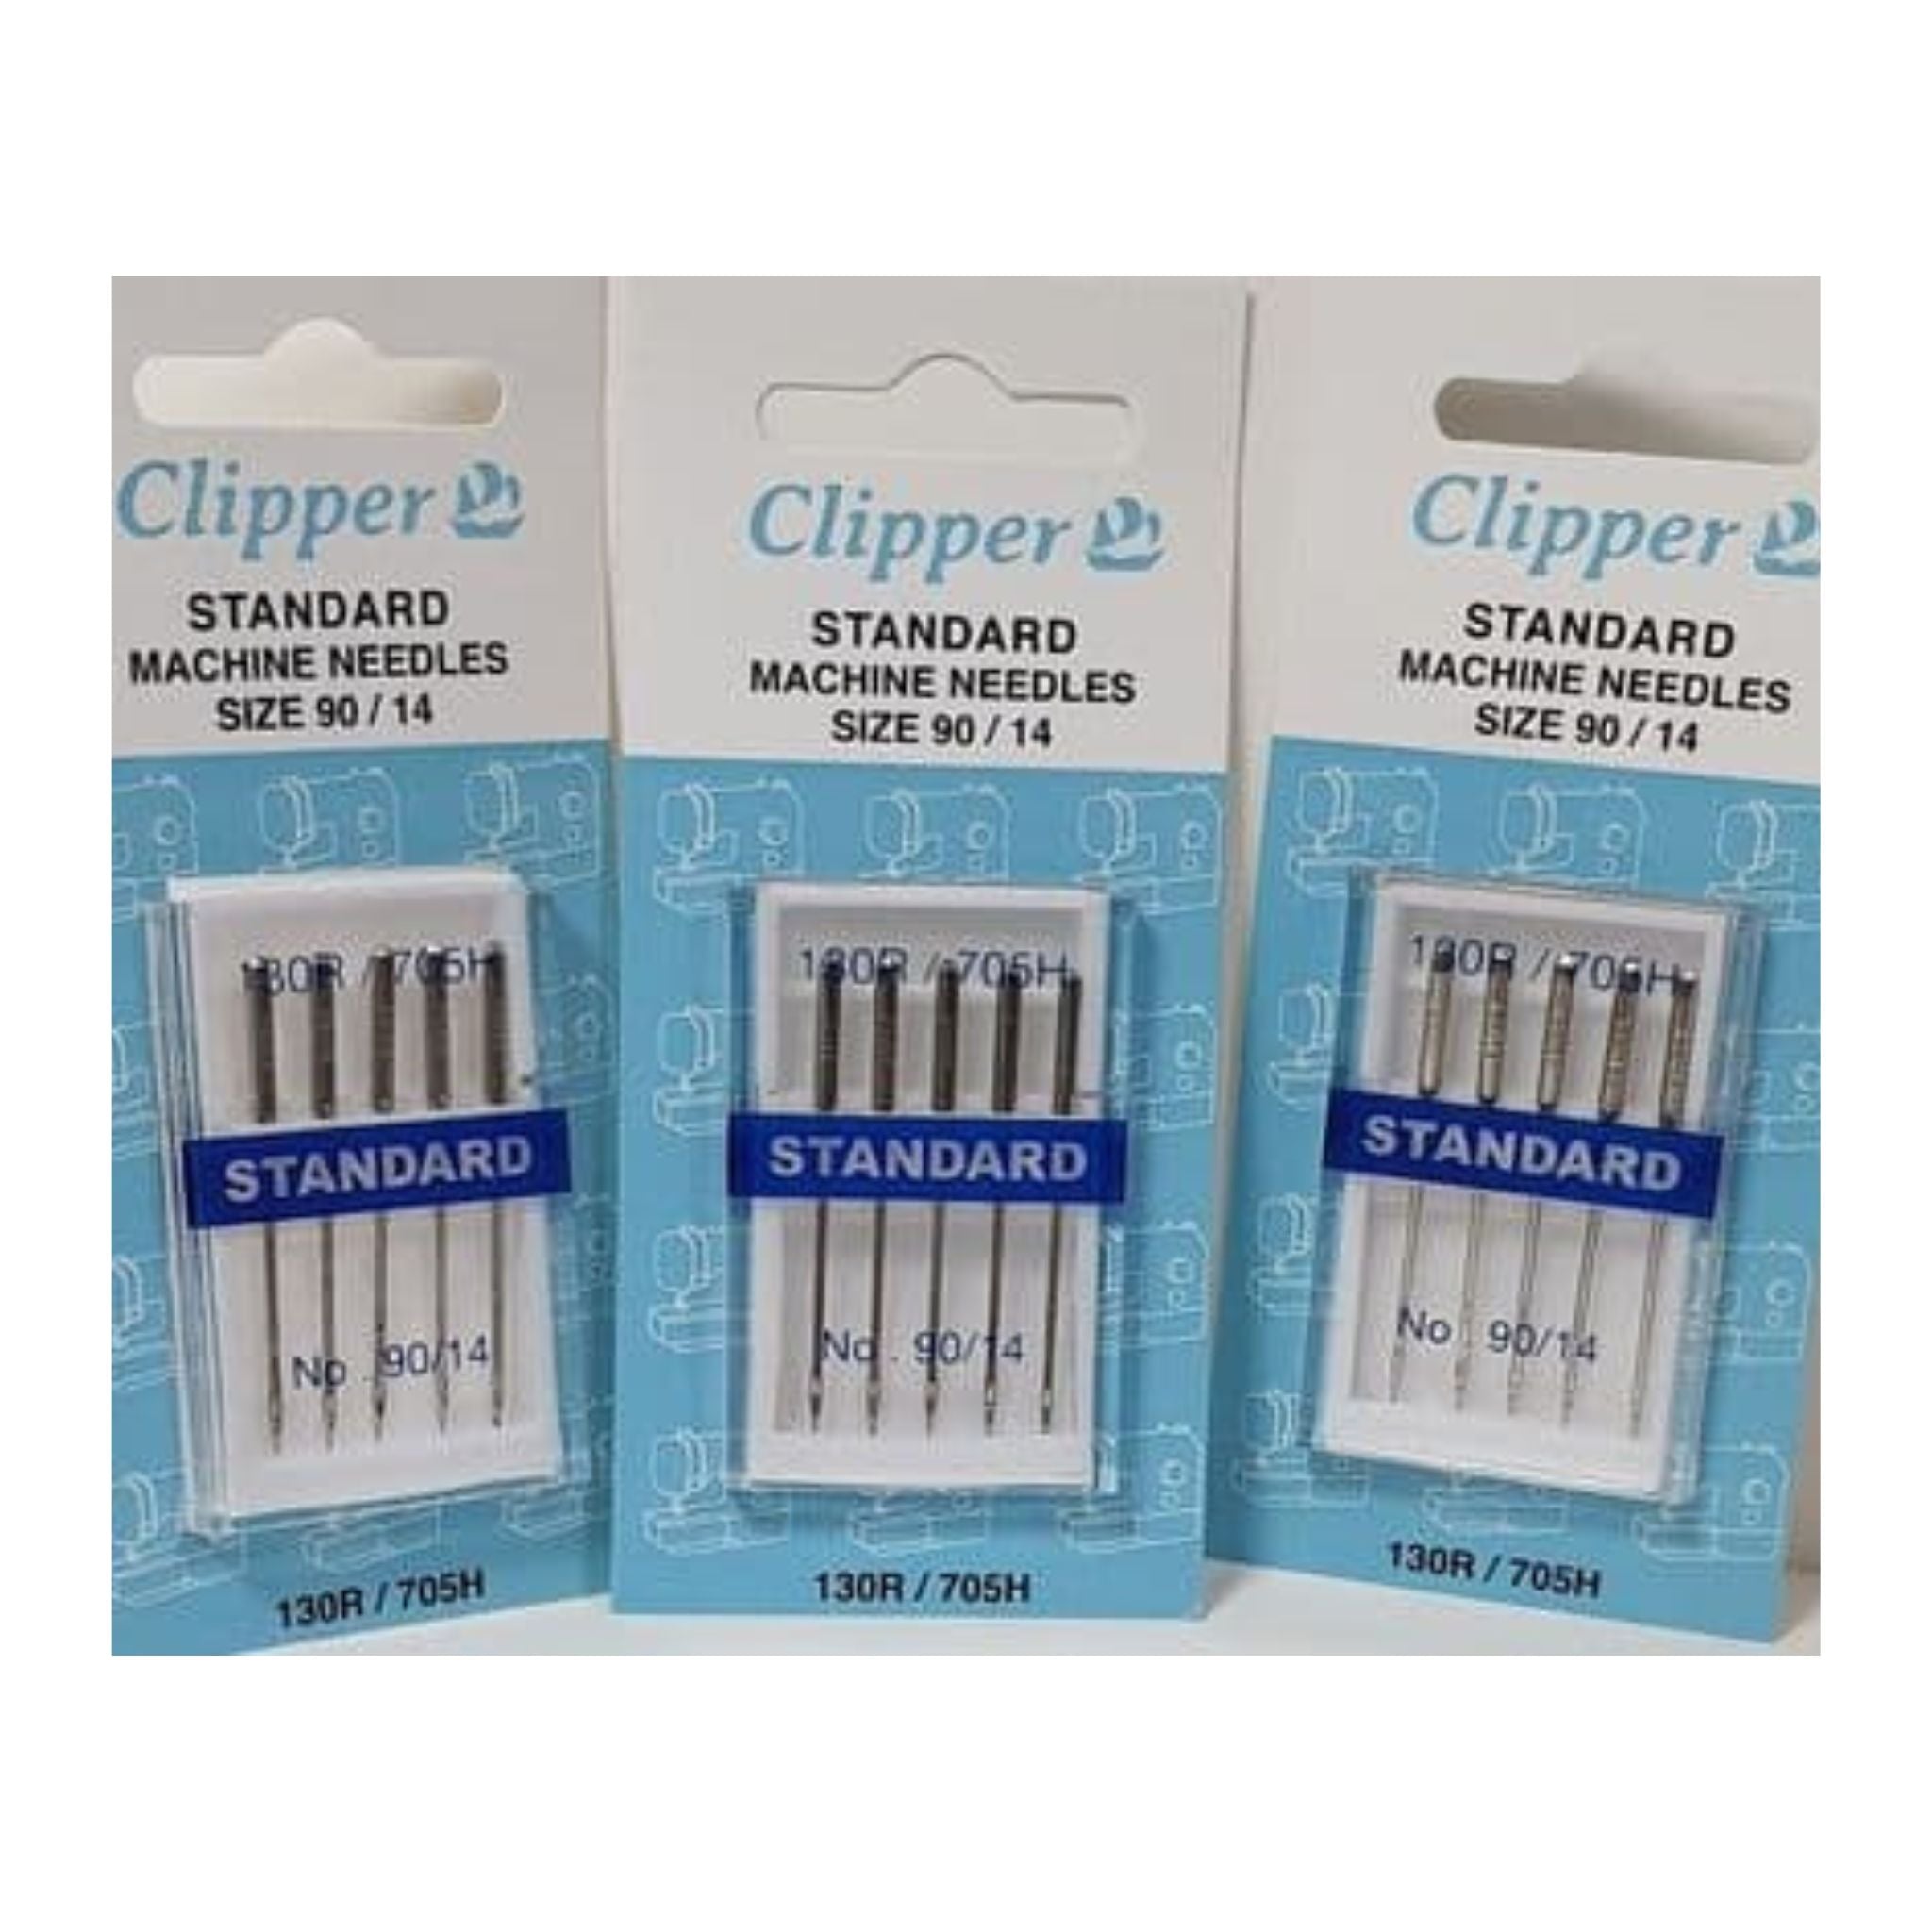 Standard size 90/14 machine needles - Clipper